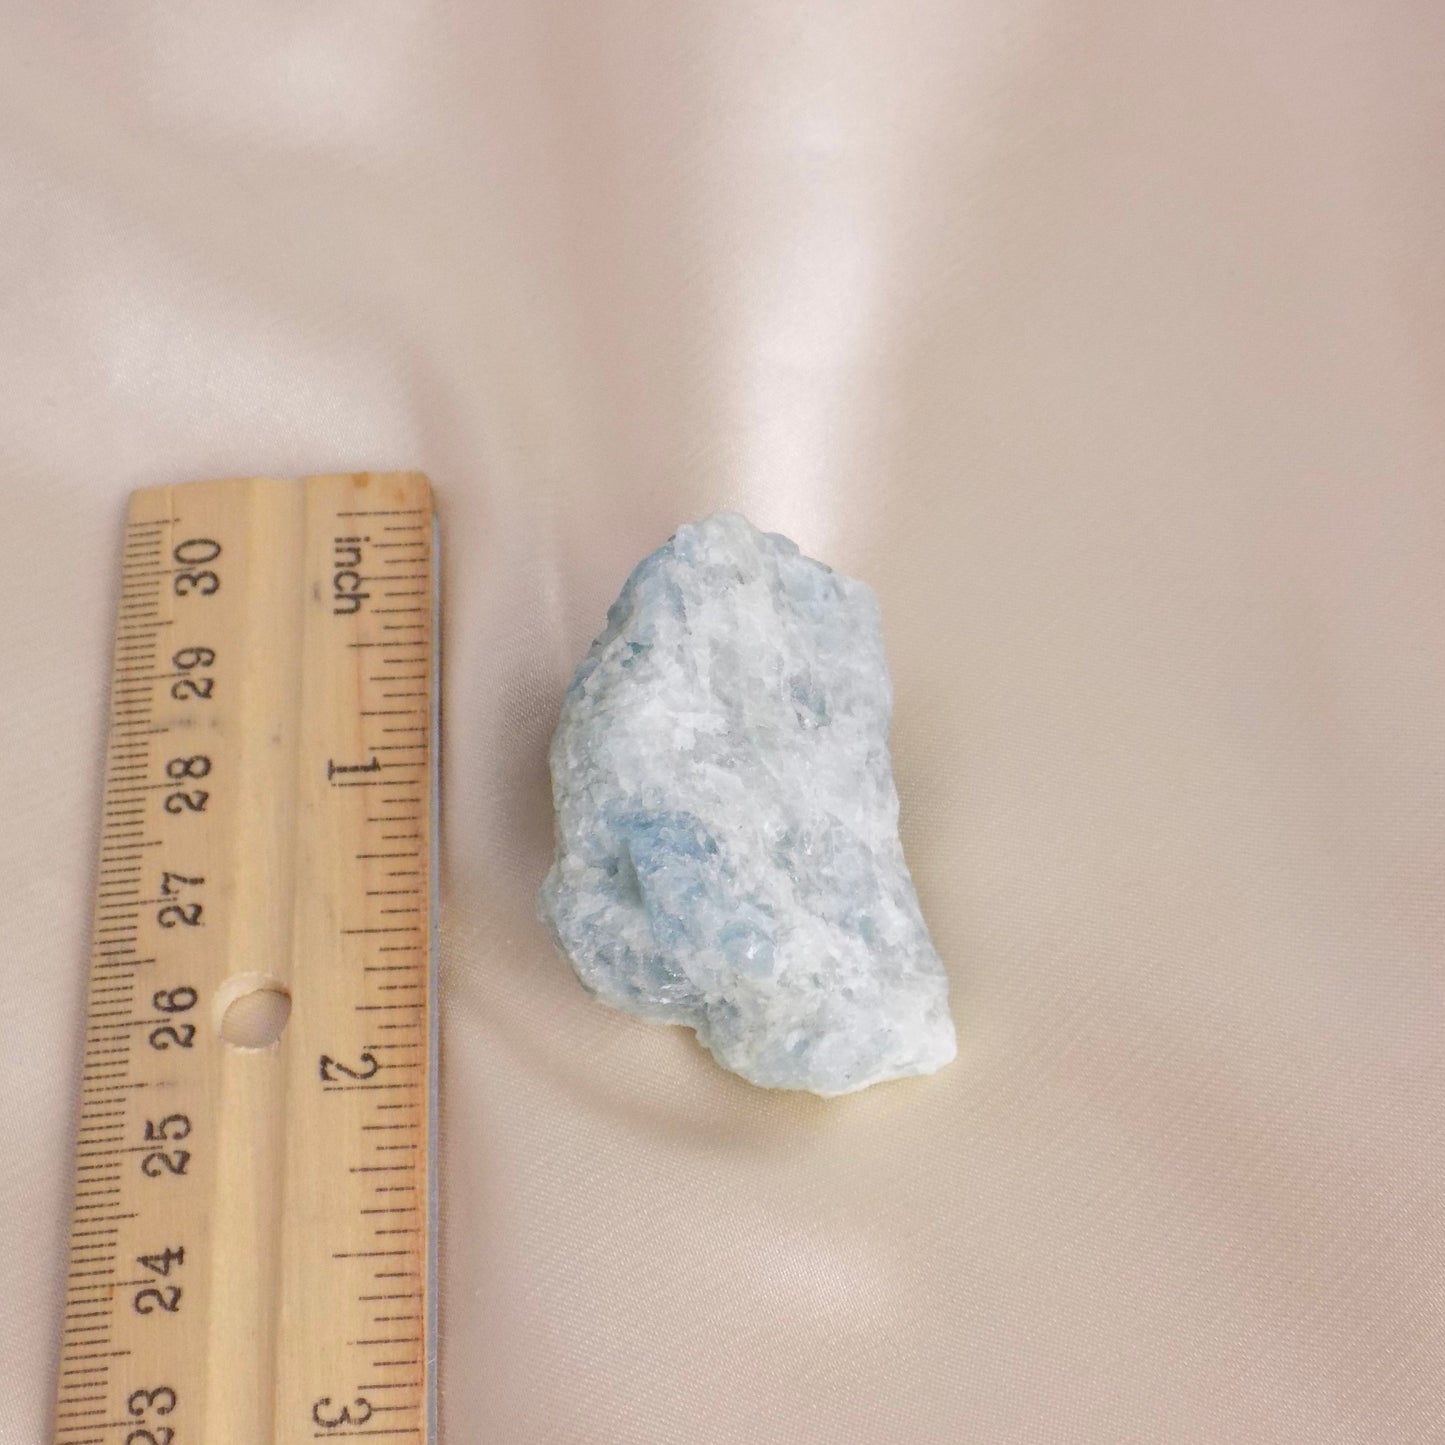 Raw Aquamarine Crystal For Home Decor Or Calming Healing Gemstone, M6-715